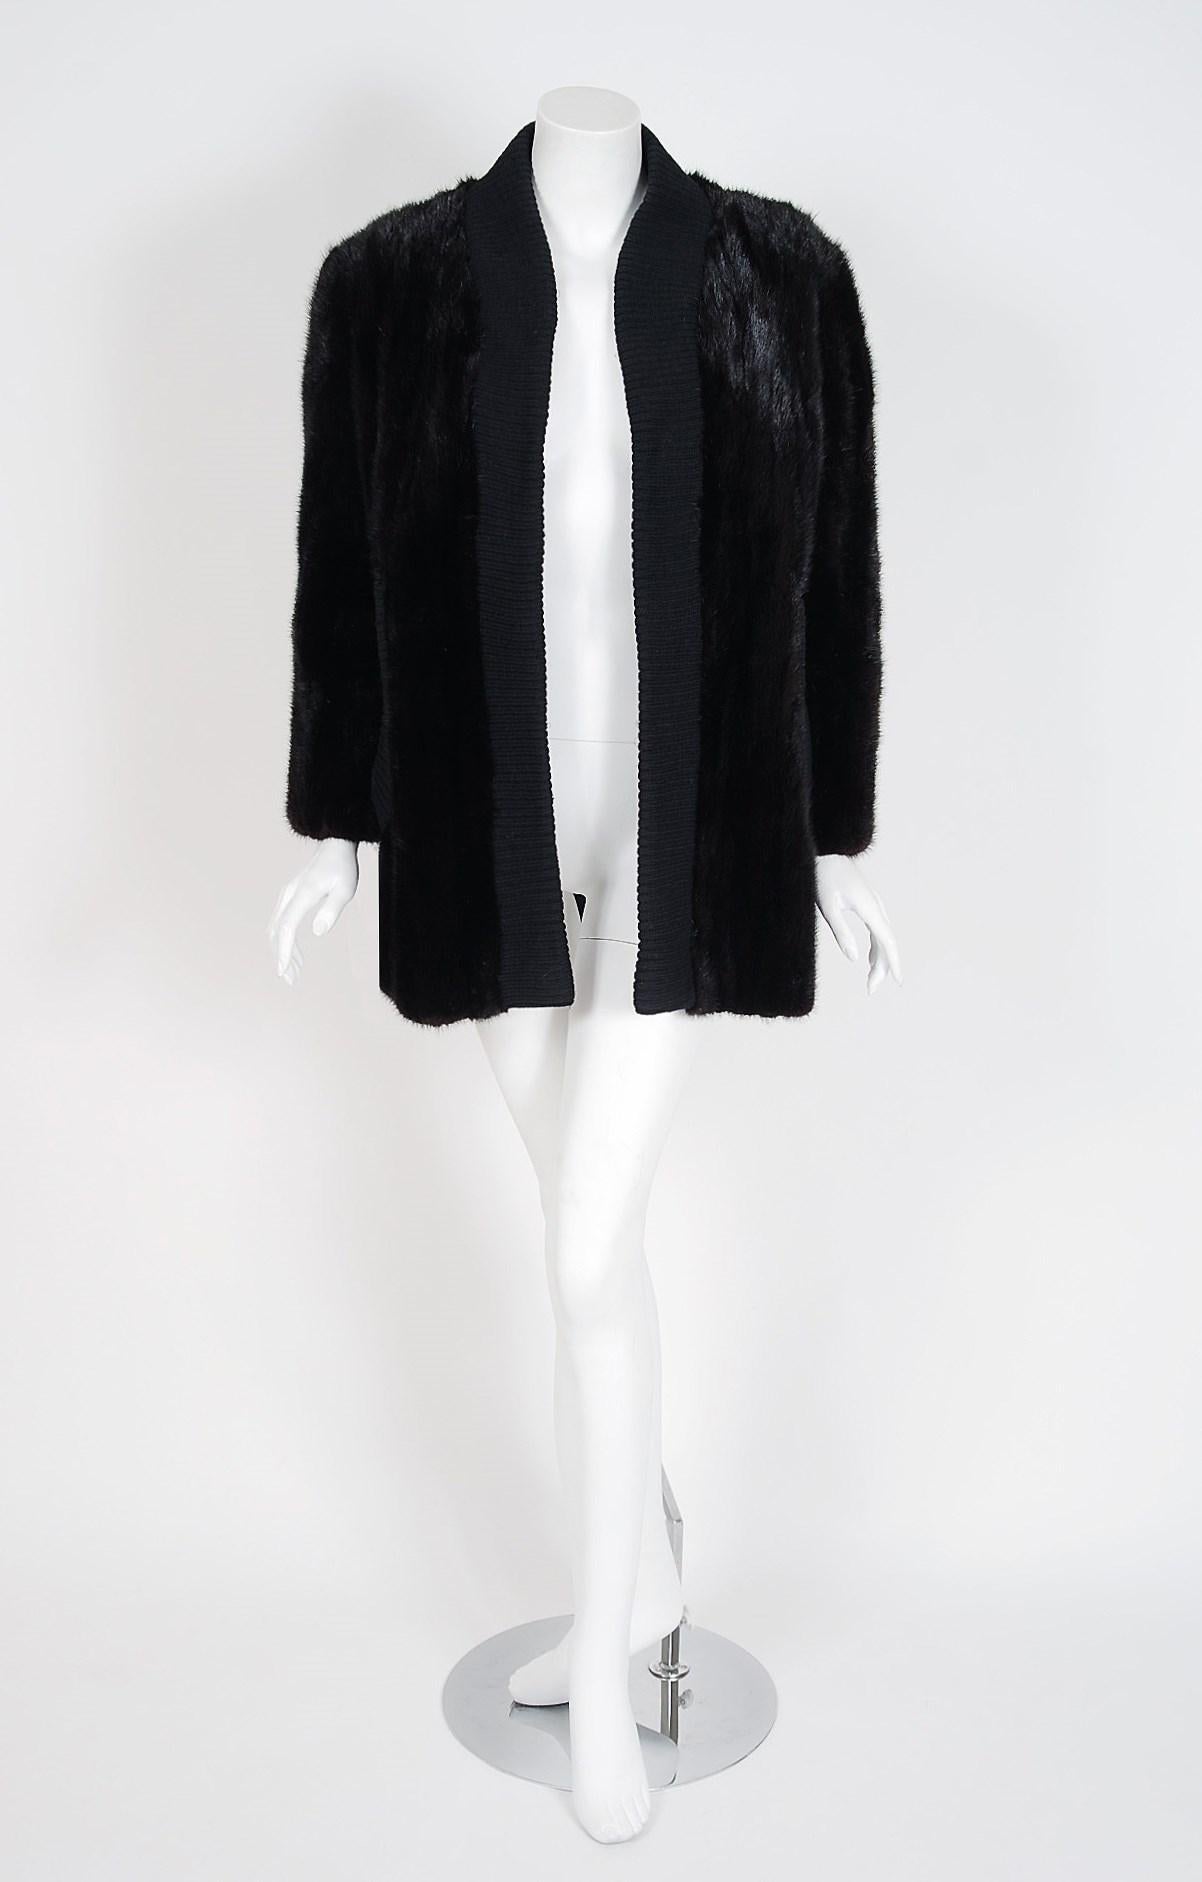 Black Vintage 1968 Pierre Cardin Couture Mink-Fur & Wool Knit Cardigan Sweater Jacket